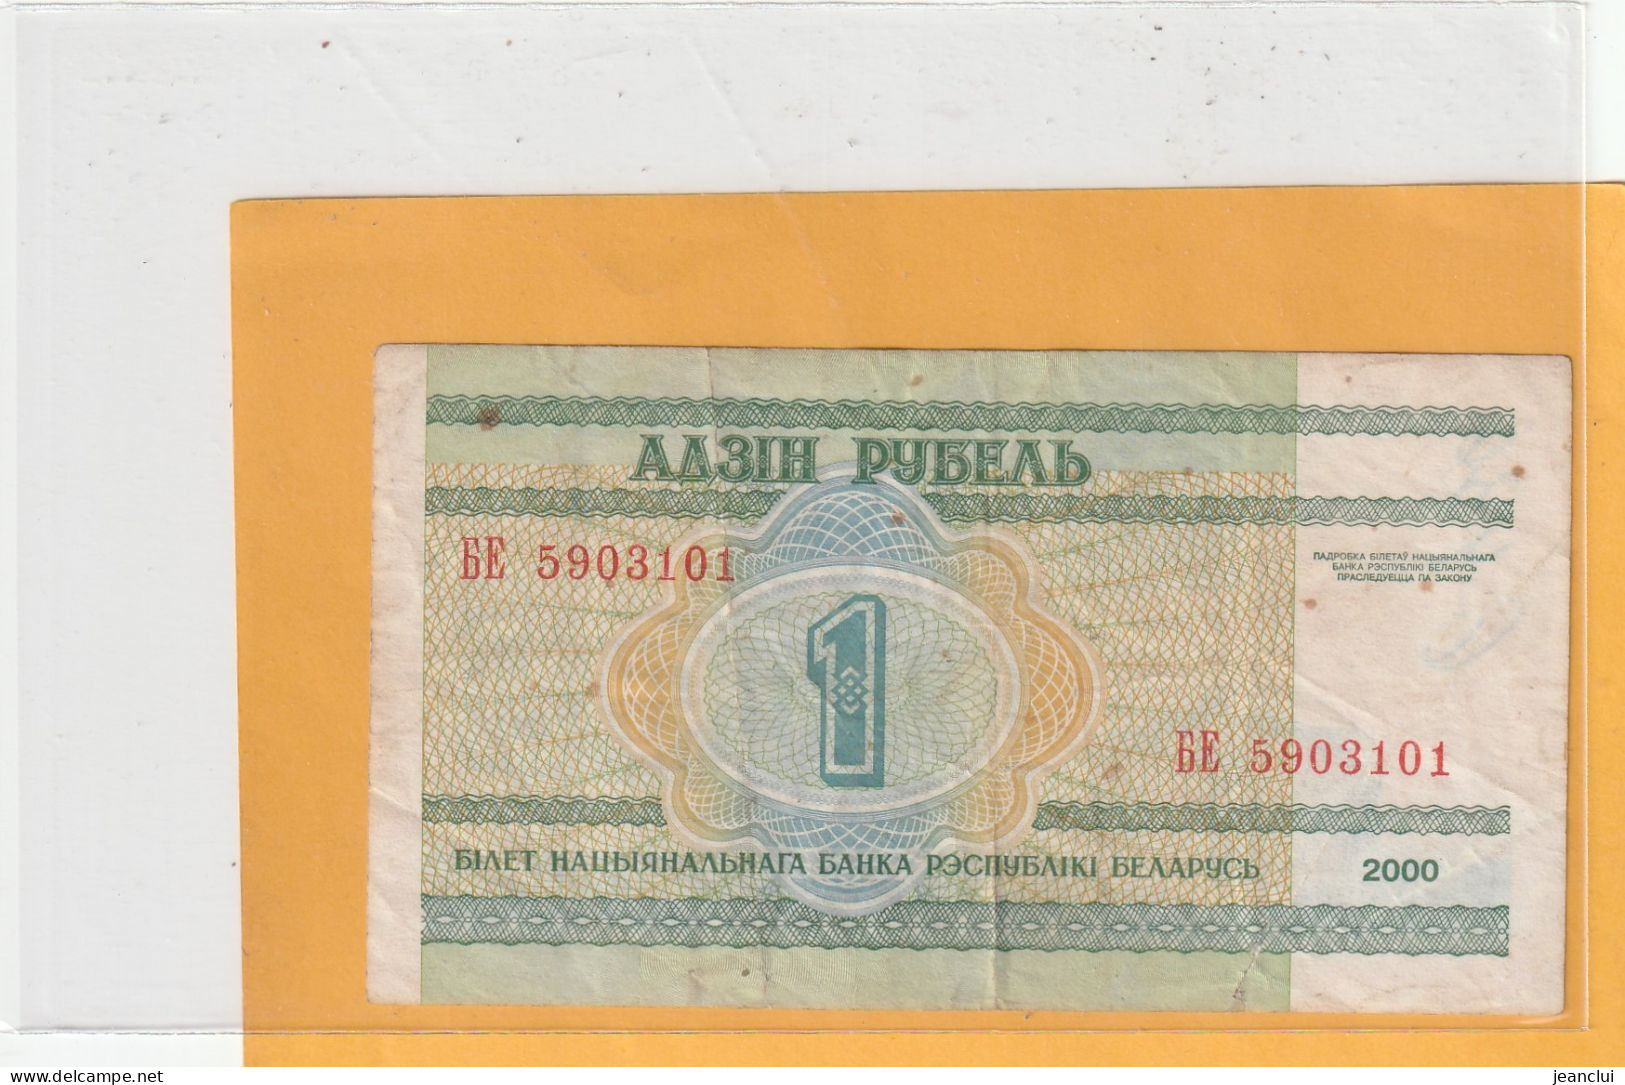 BELARUS NATIONAL BANK  .  1 RUBLEI   . N°  BE 5903101 .  2000     2 SCANNES  .  BILLET ETAT USITE - Belarus